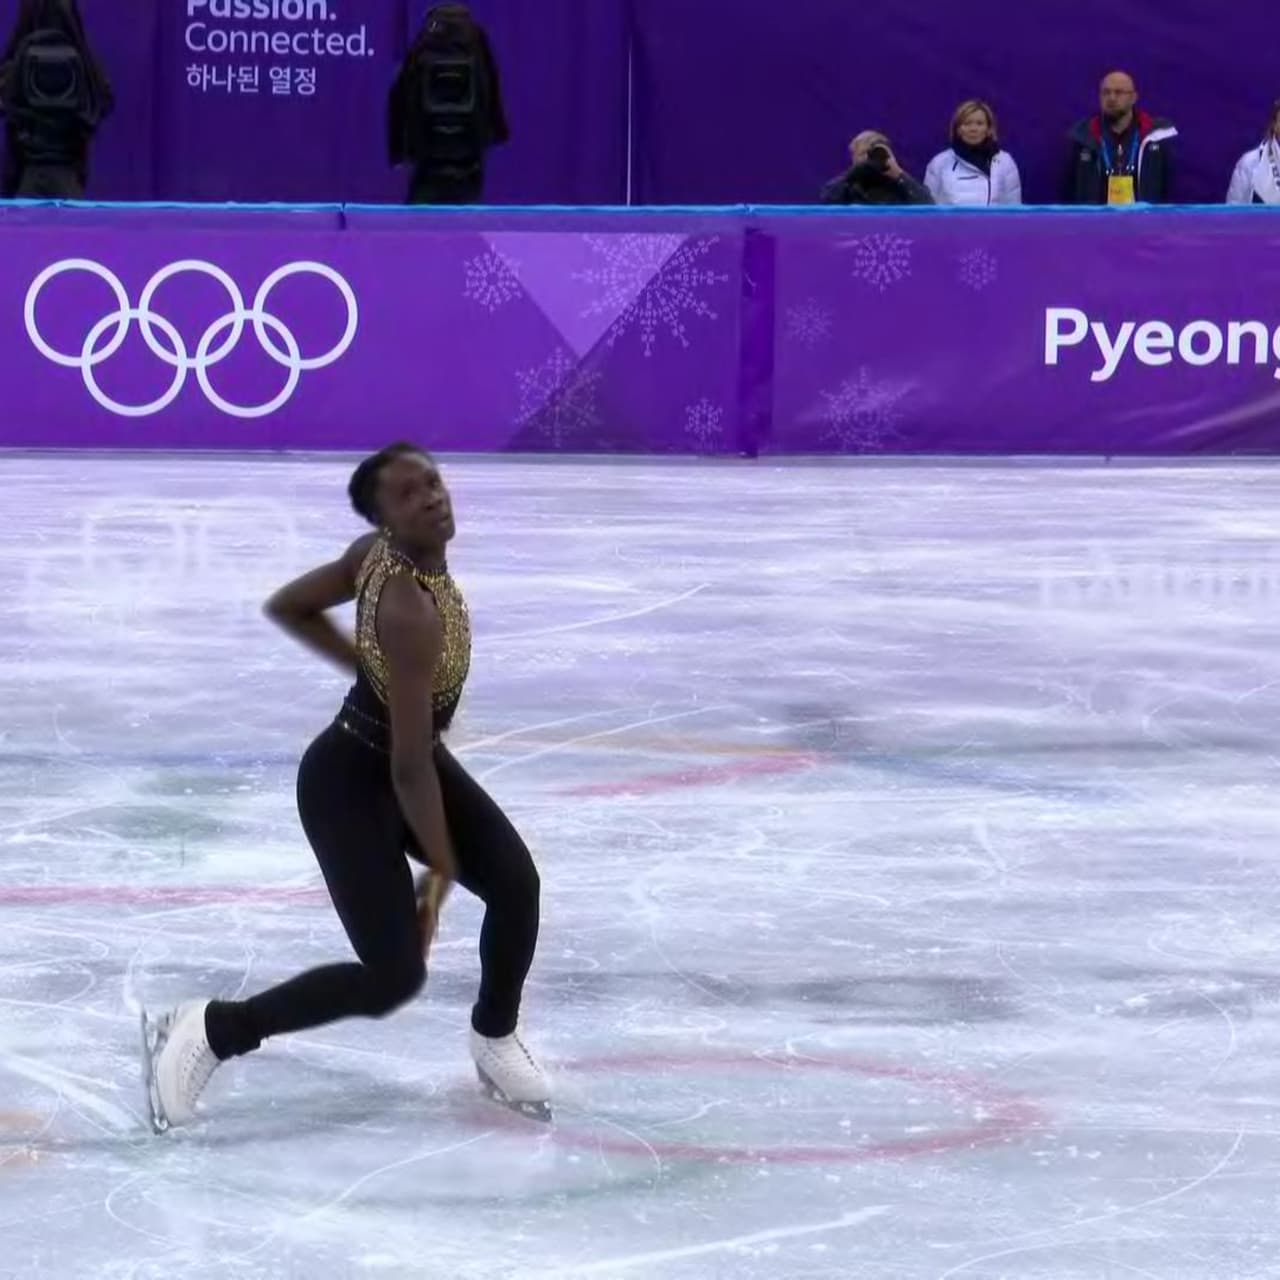 French Figure Skater Maé-Bérénice Méité Just Performed to Beyoncé